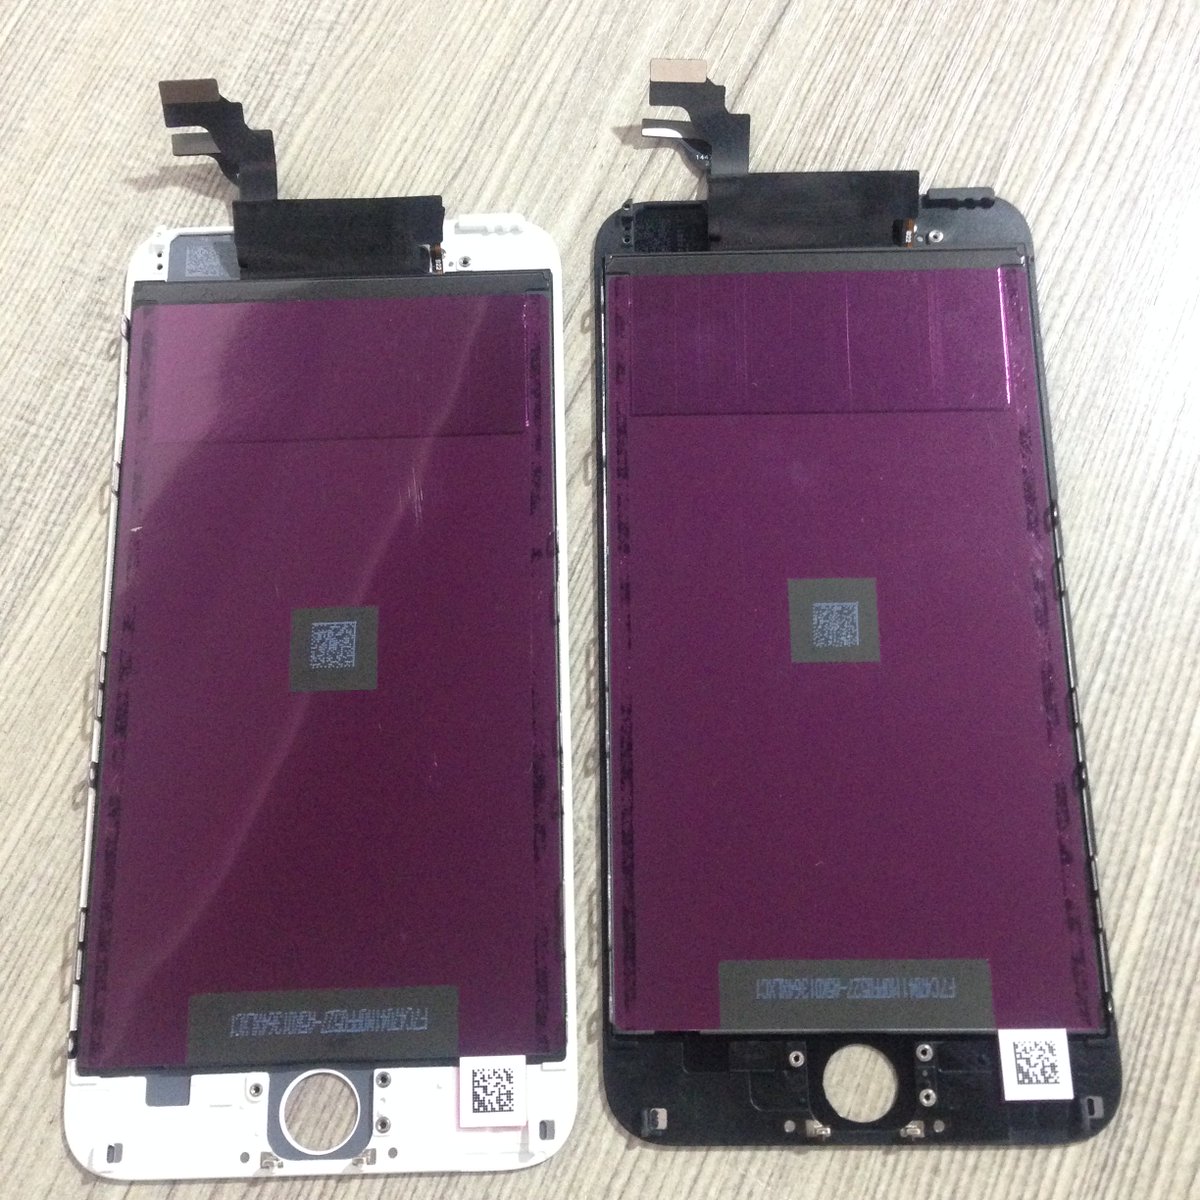 phoneparts.wholesale213#wefixitall #iphone7 #iphone6 #crackedscreen #glass #iphone5c #technology #ipad #surfacepro #macbook #console